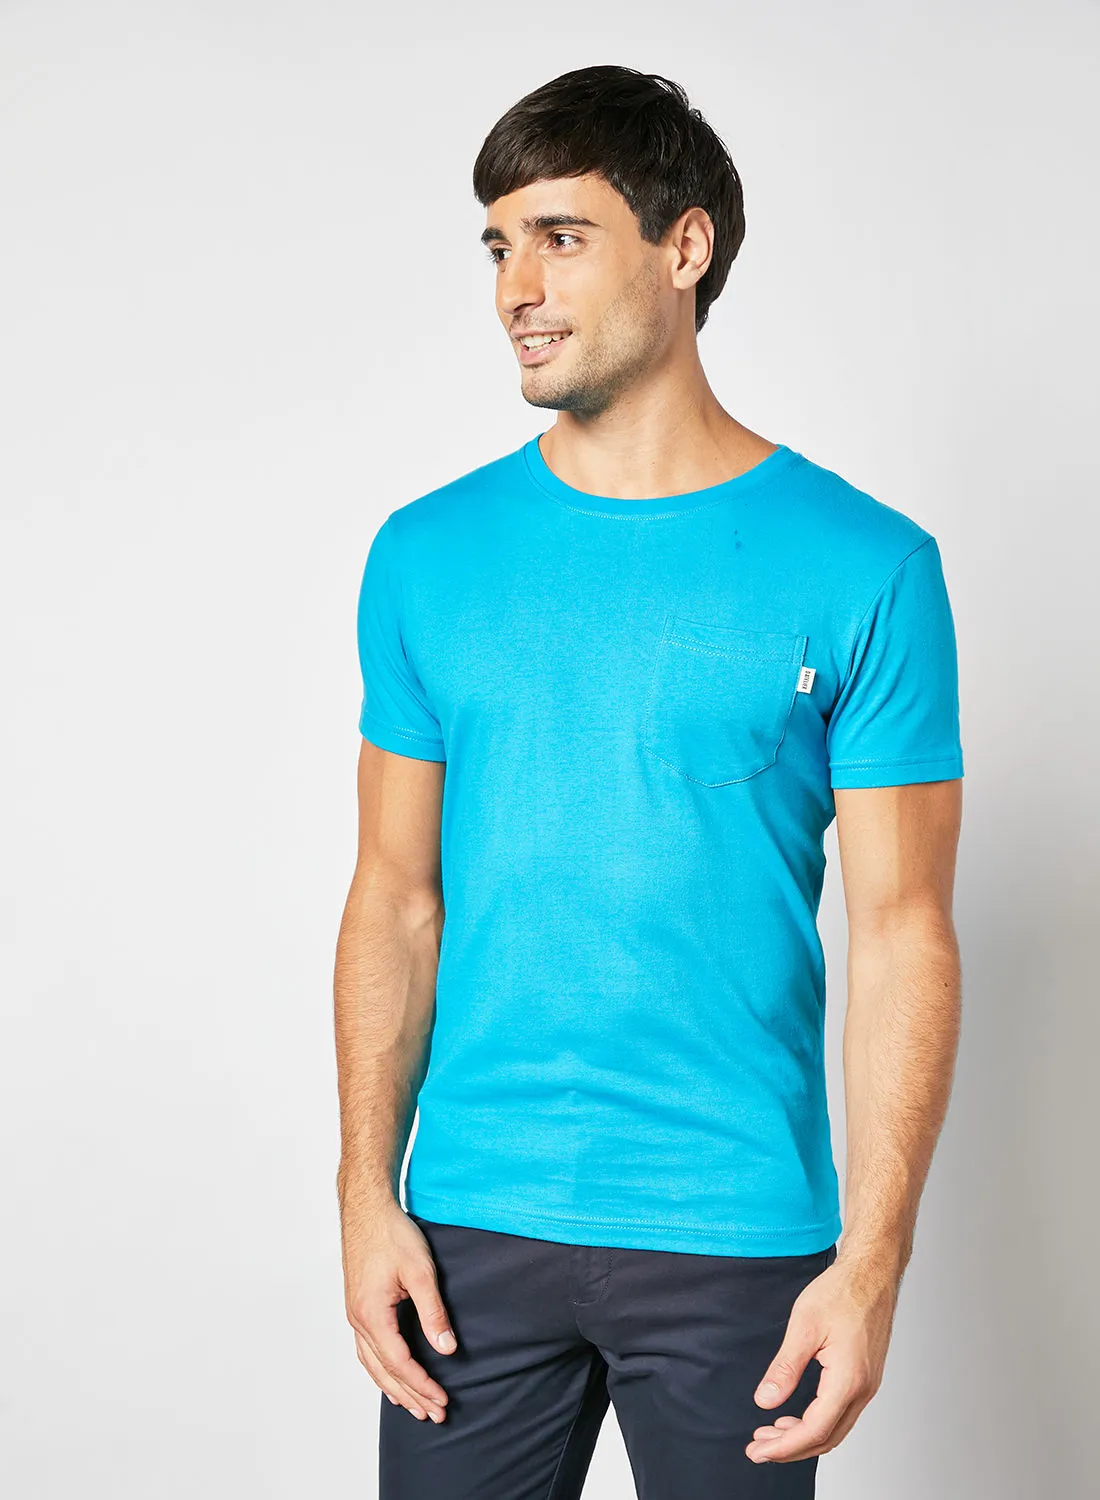 Sivvi x D'Atelier Patch Pocket T-Shirt أزرق فاتح